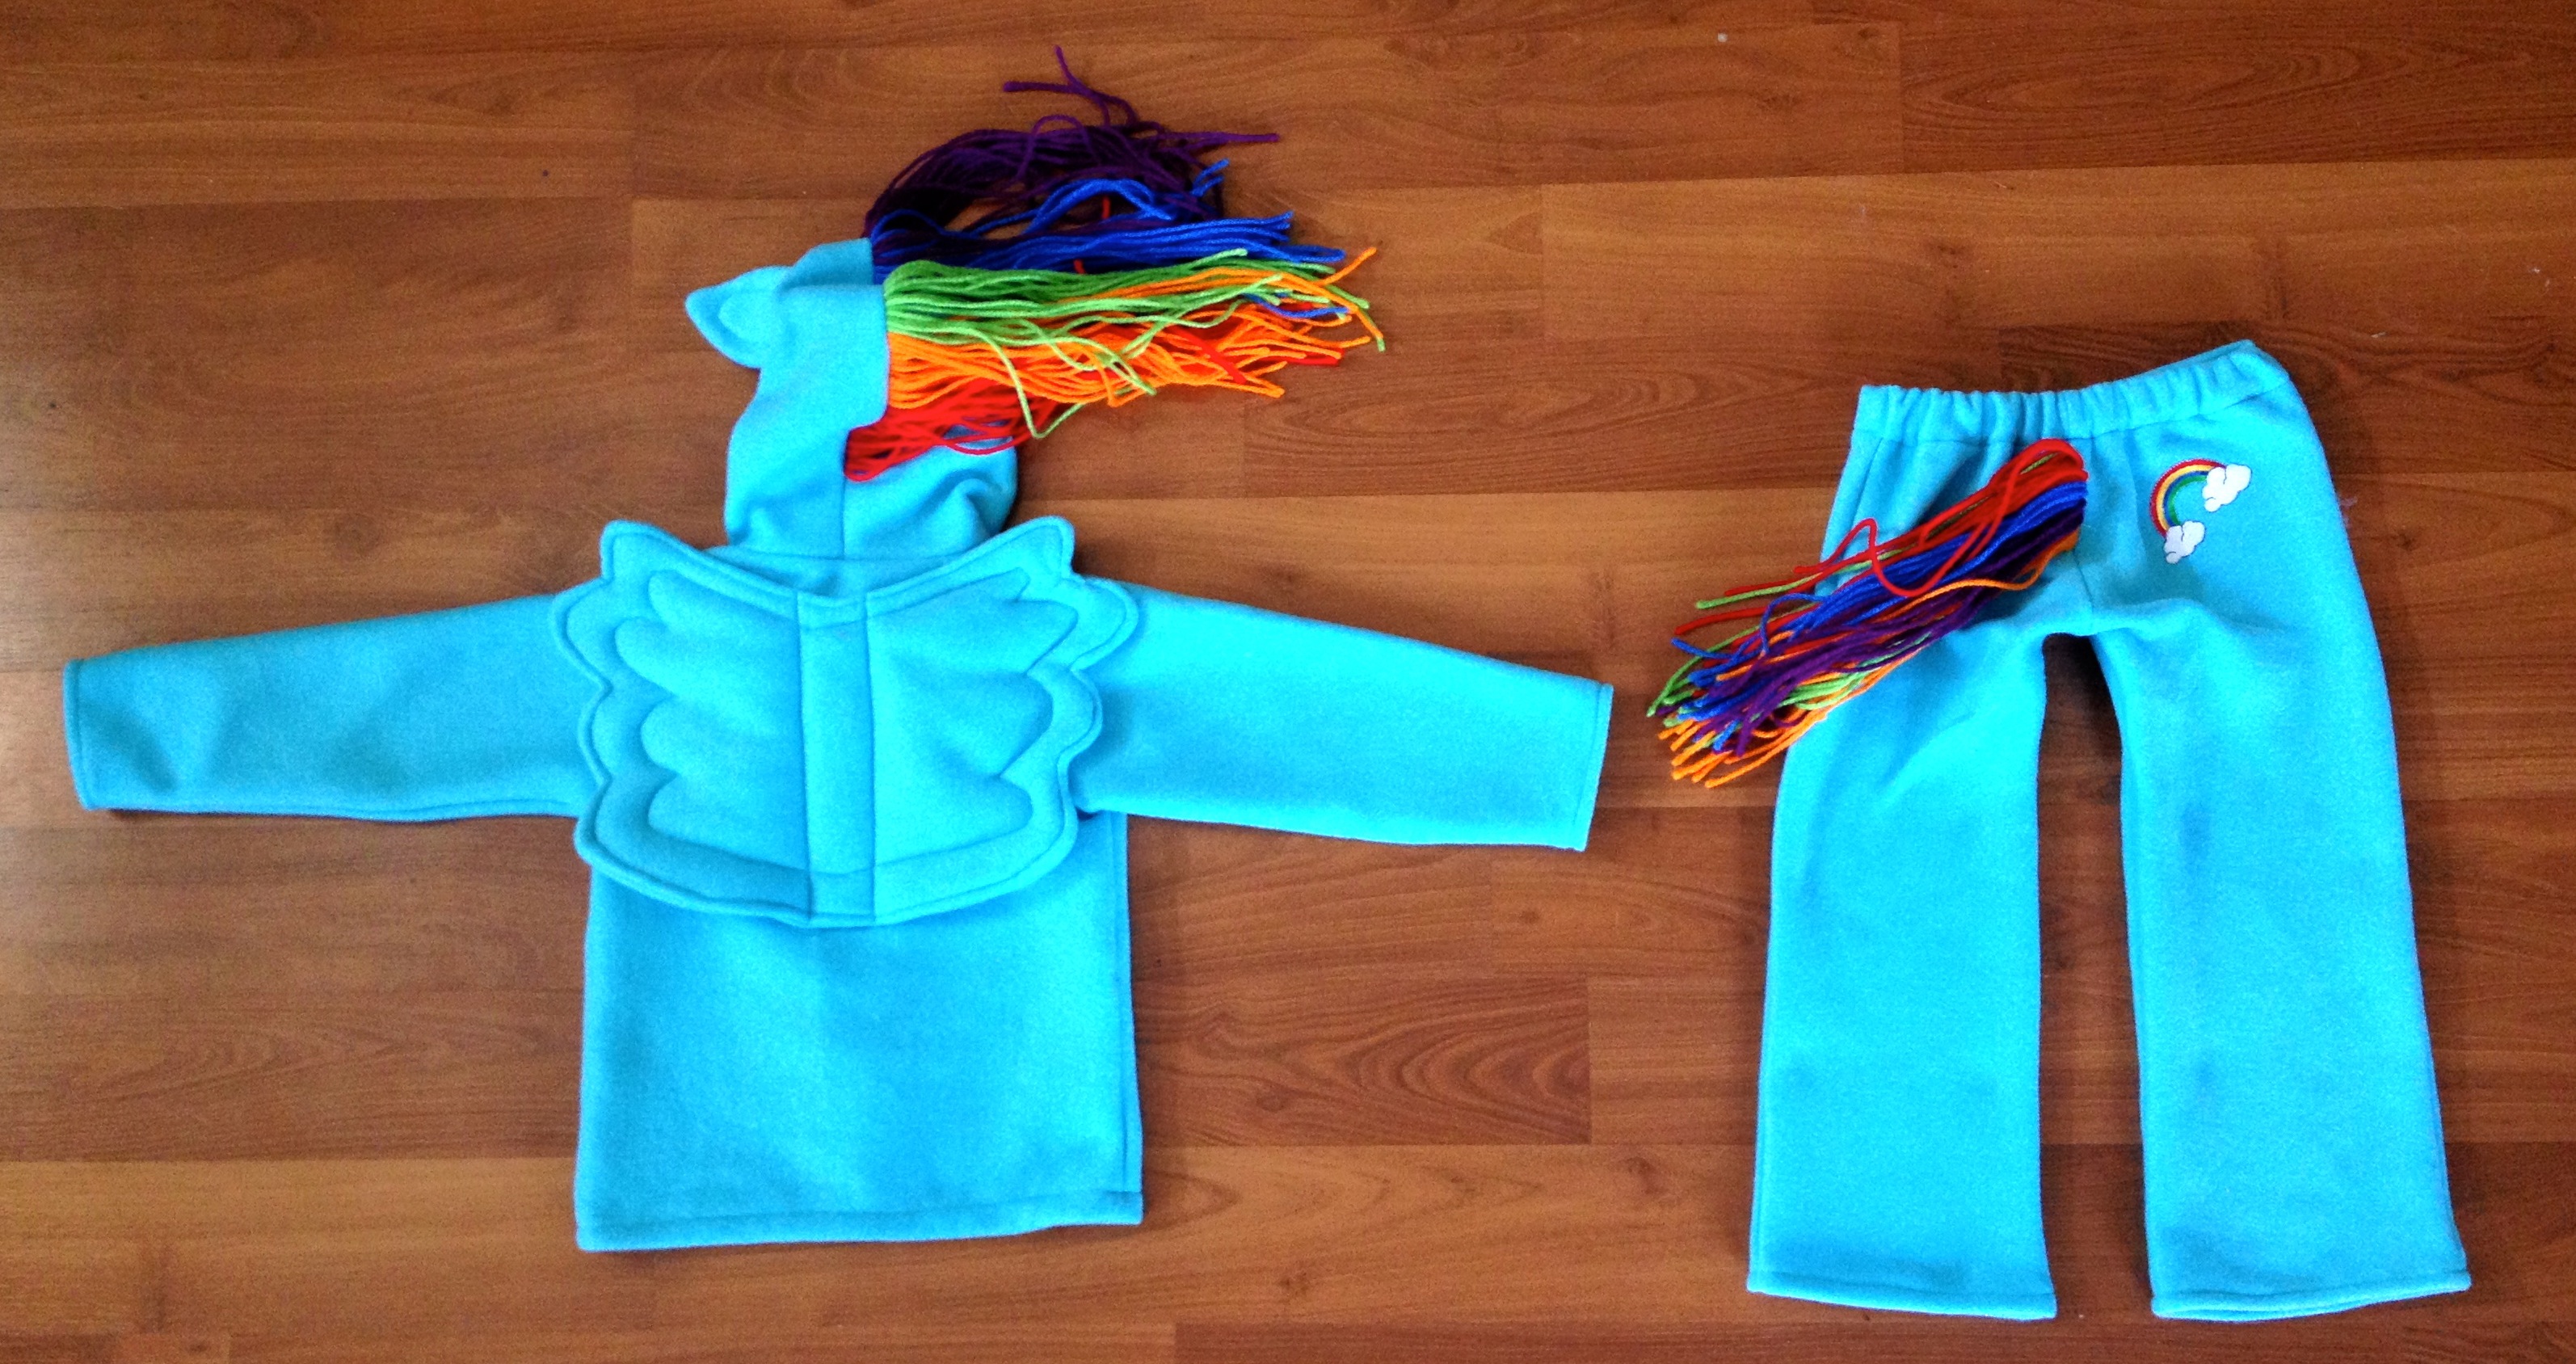 DIY Rainbow Dash Costume